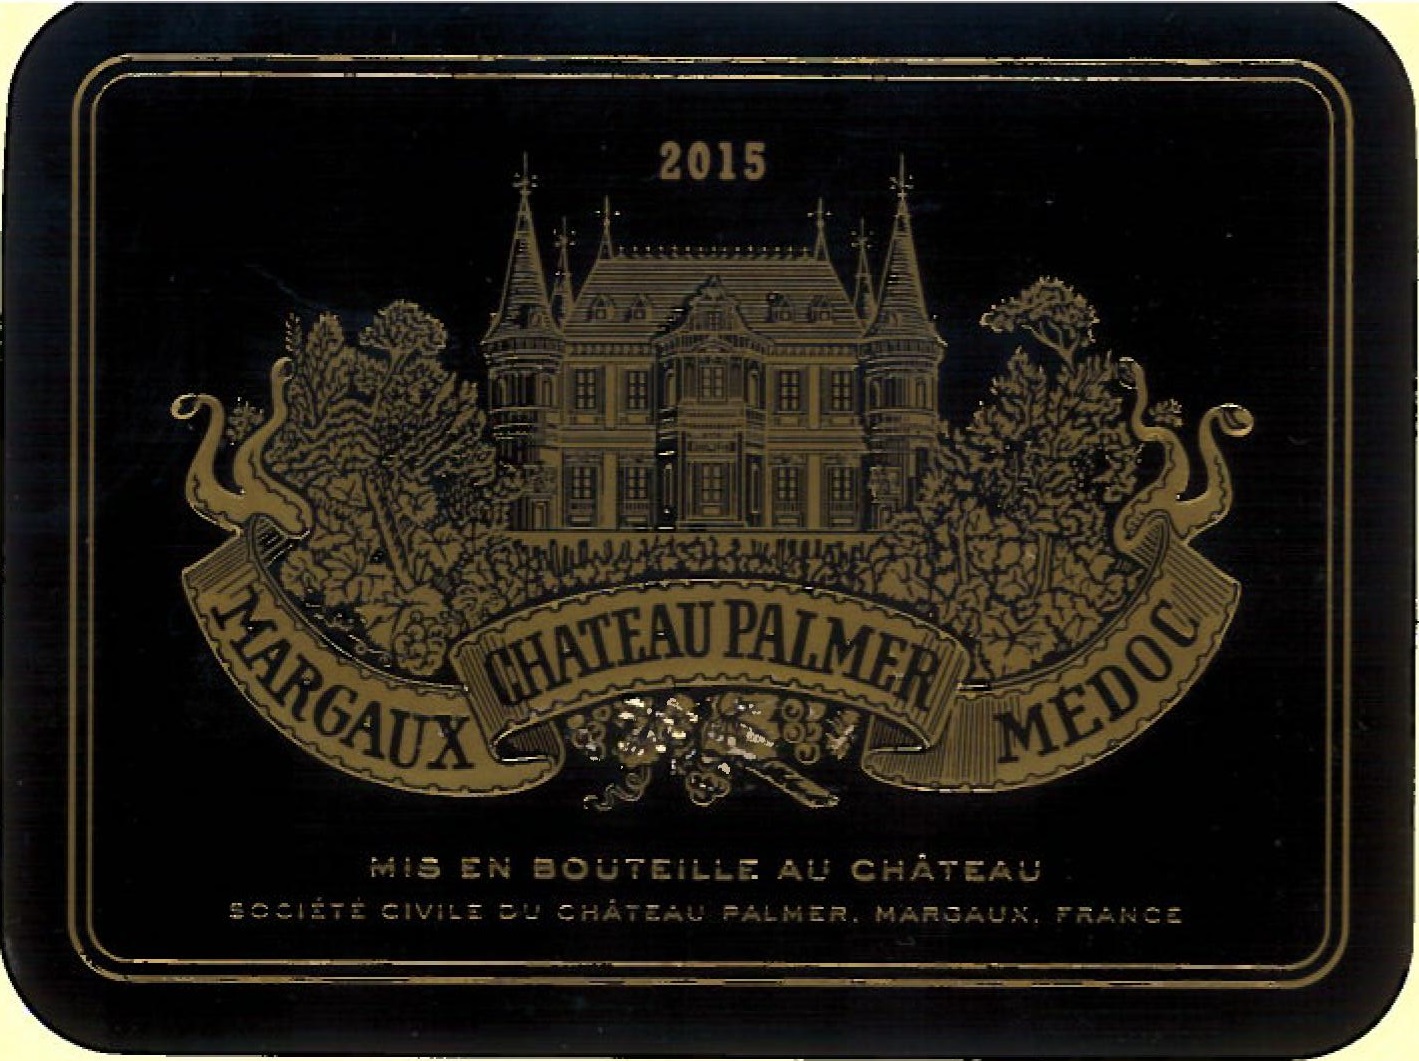 Château Palmer AOC Margaux Rot 2015